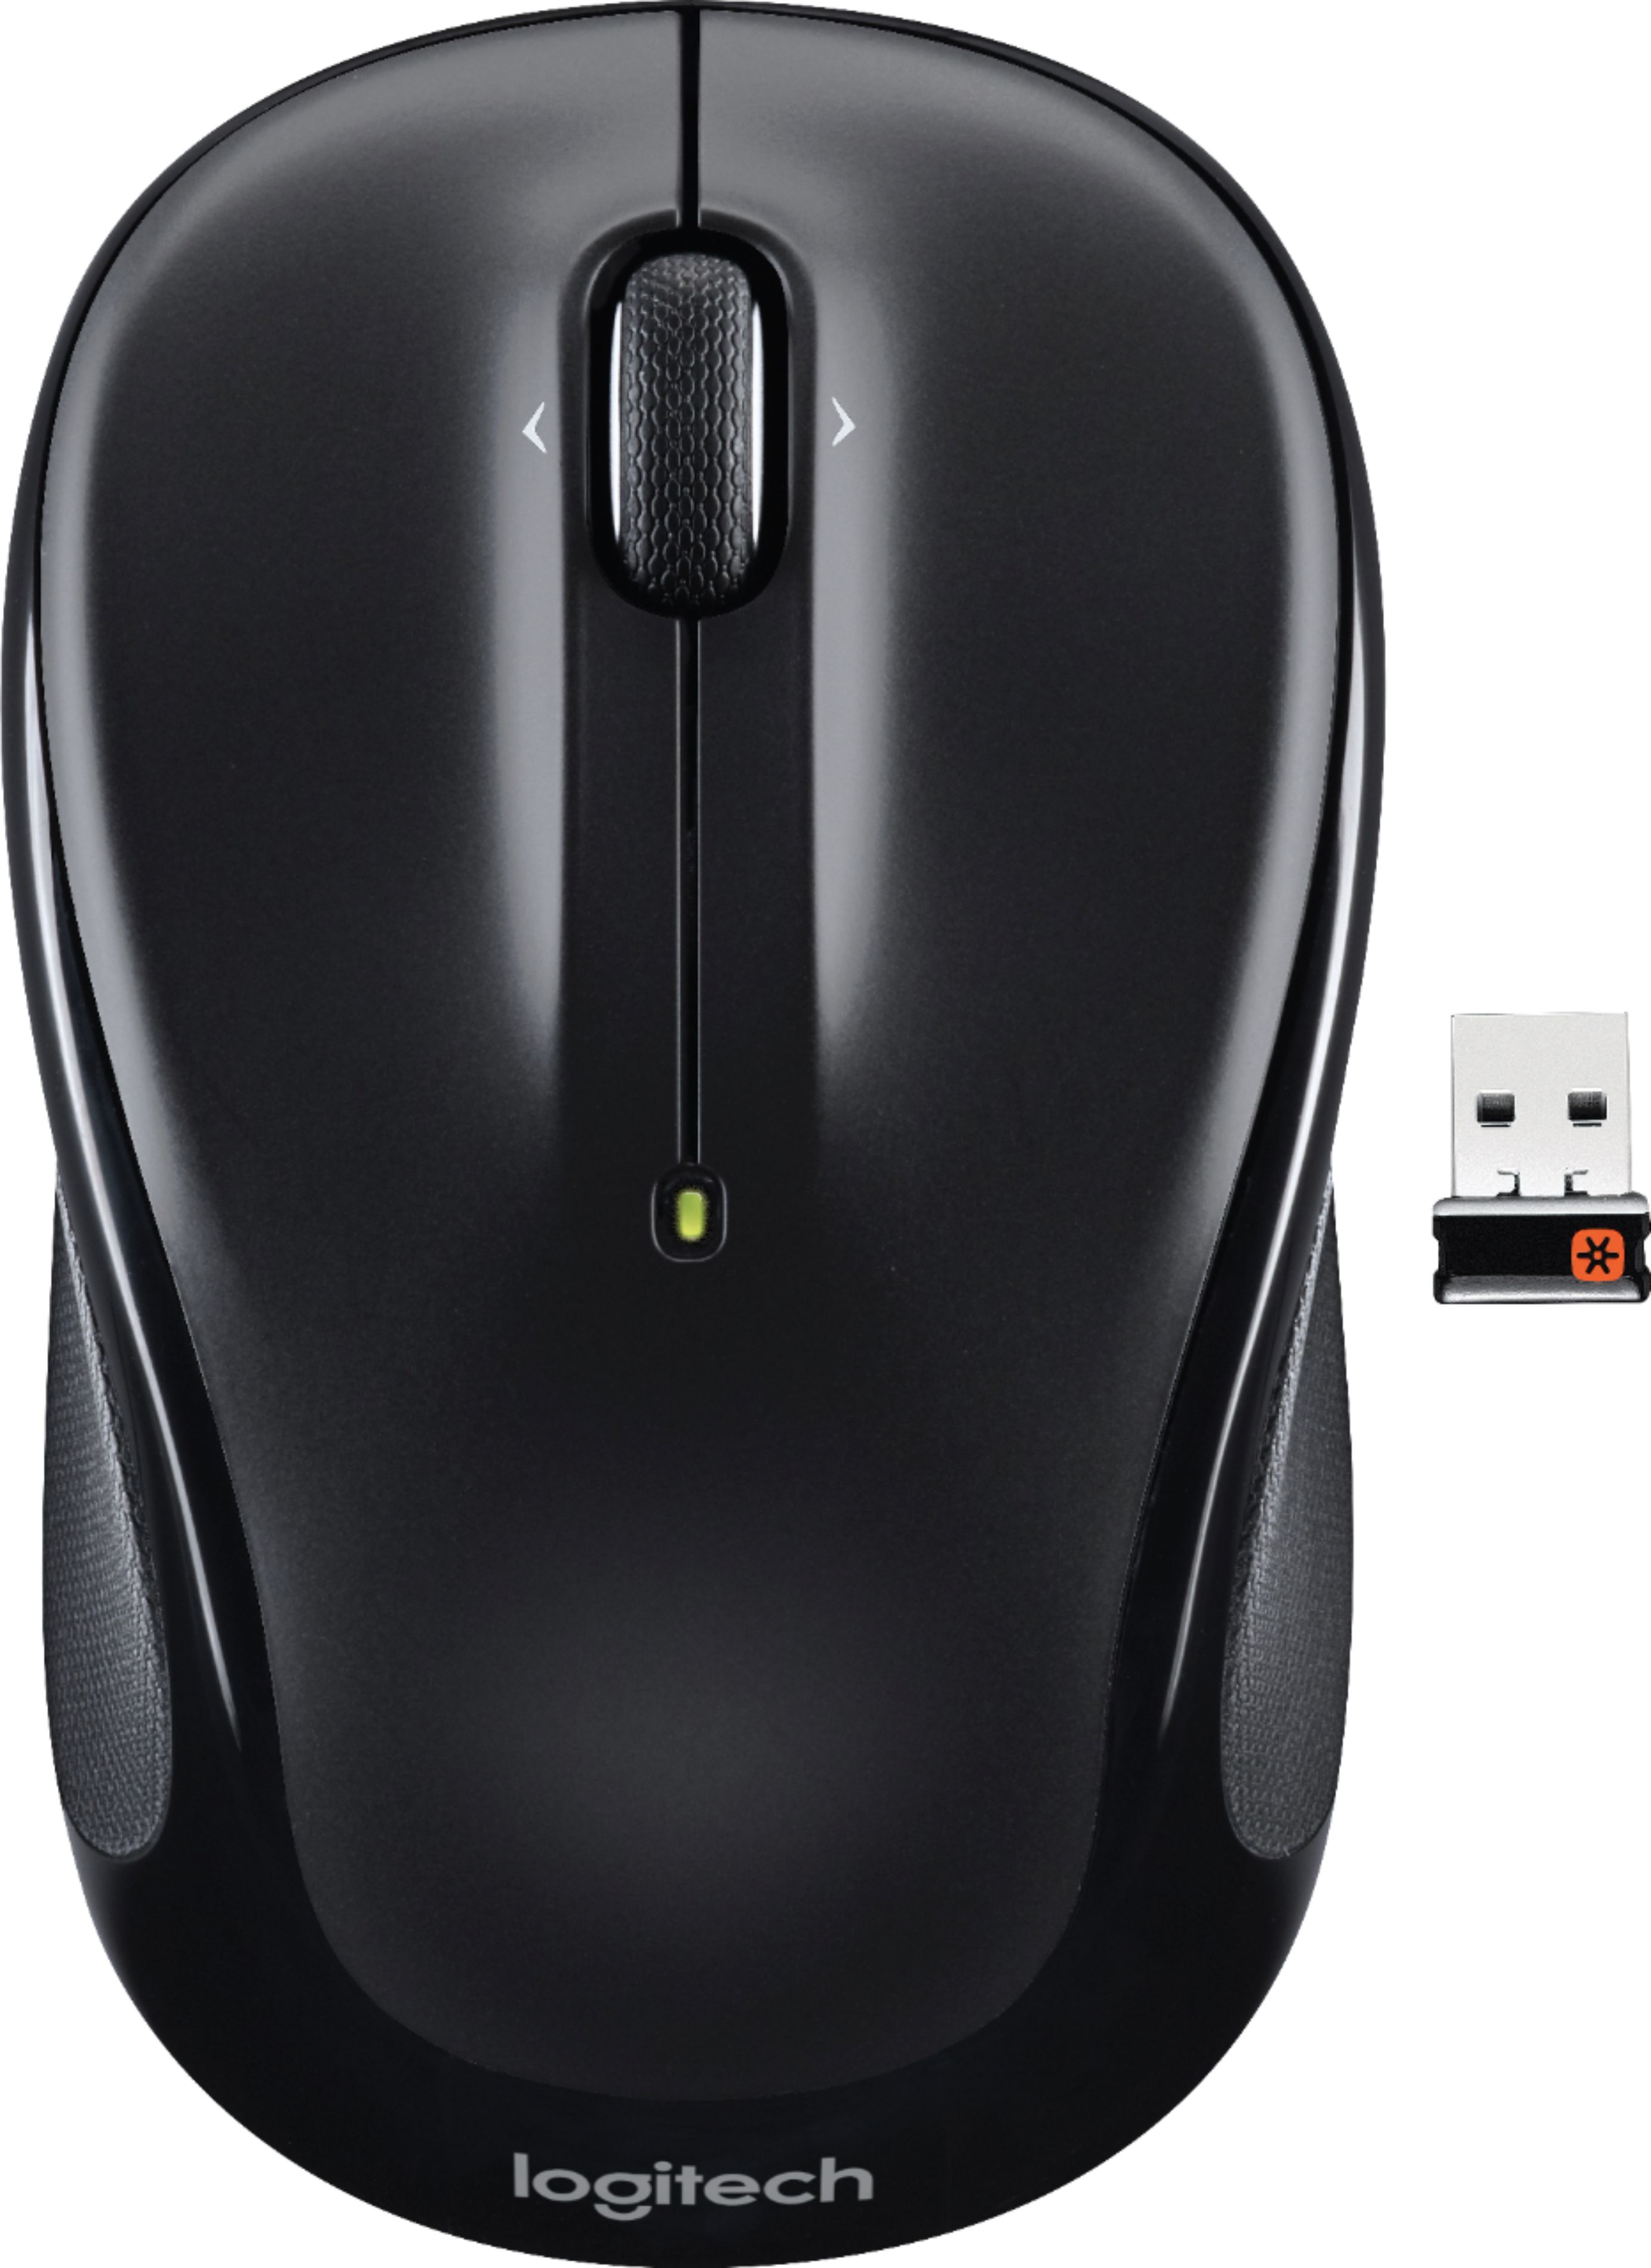 Logitech - M325 Wireless Optical Mouse with Ambidextrous design - Black